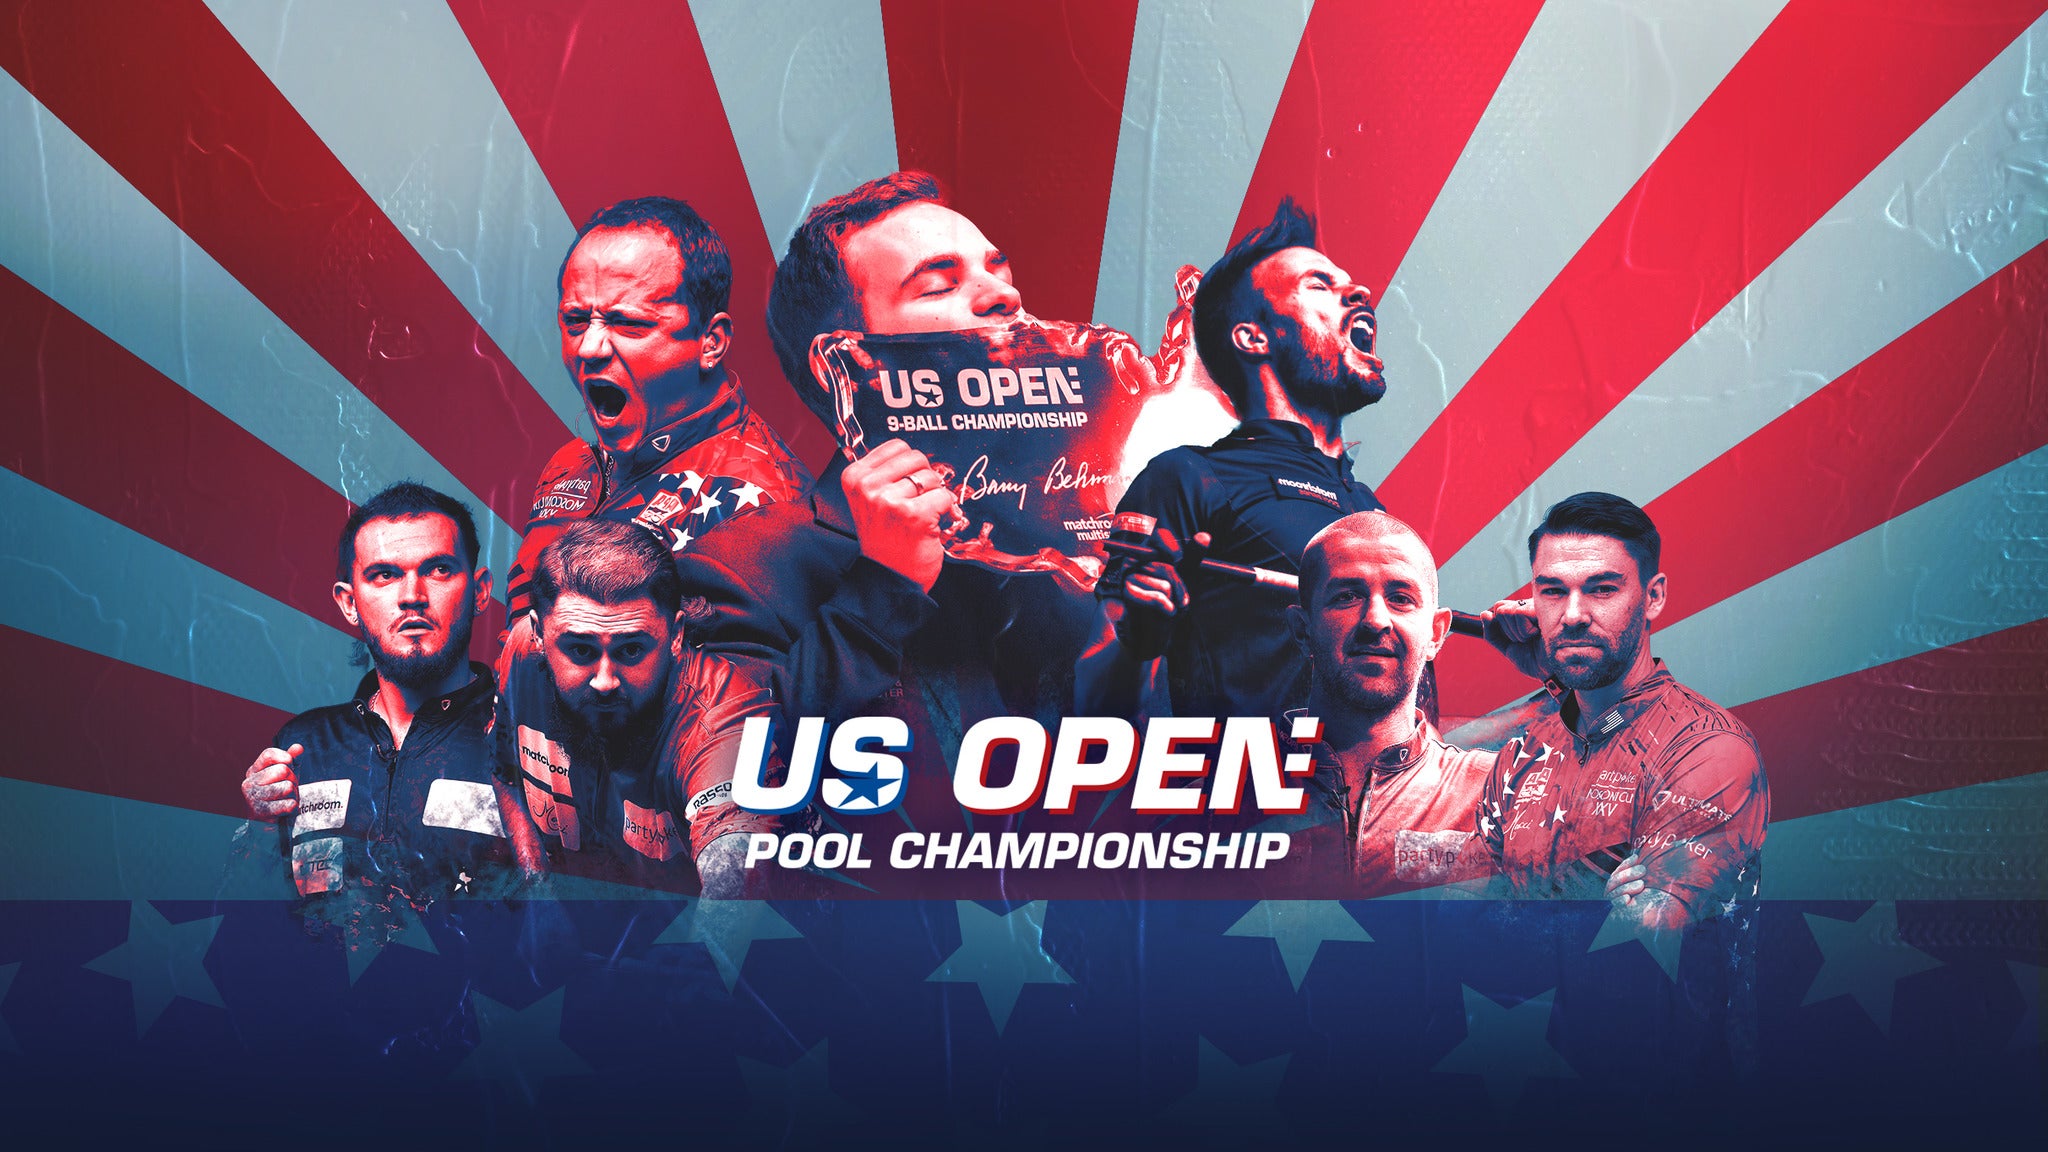 US Open Pool Championship presale information on freepresalepasswords.com